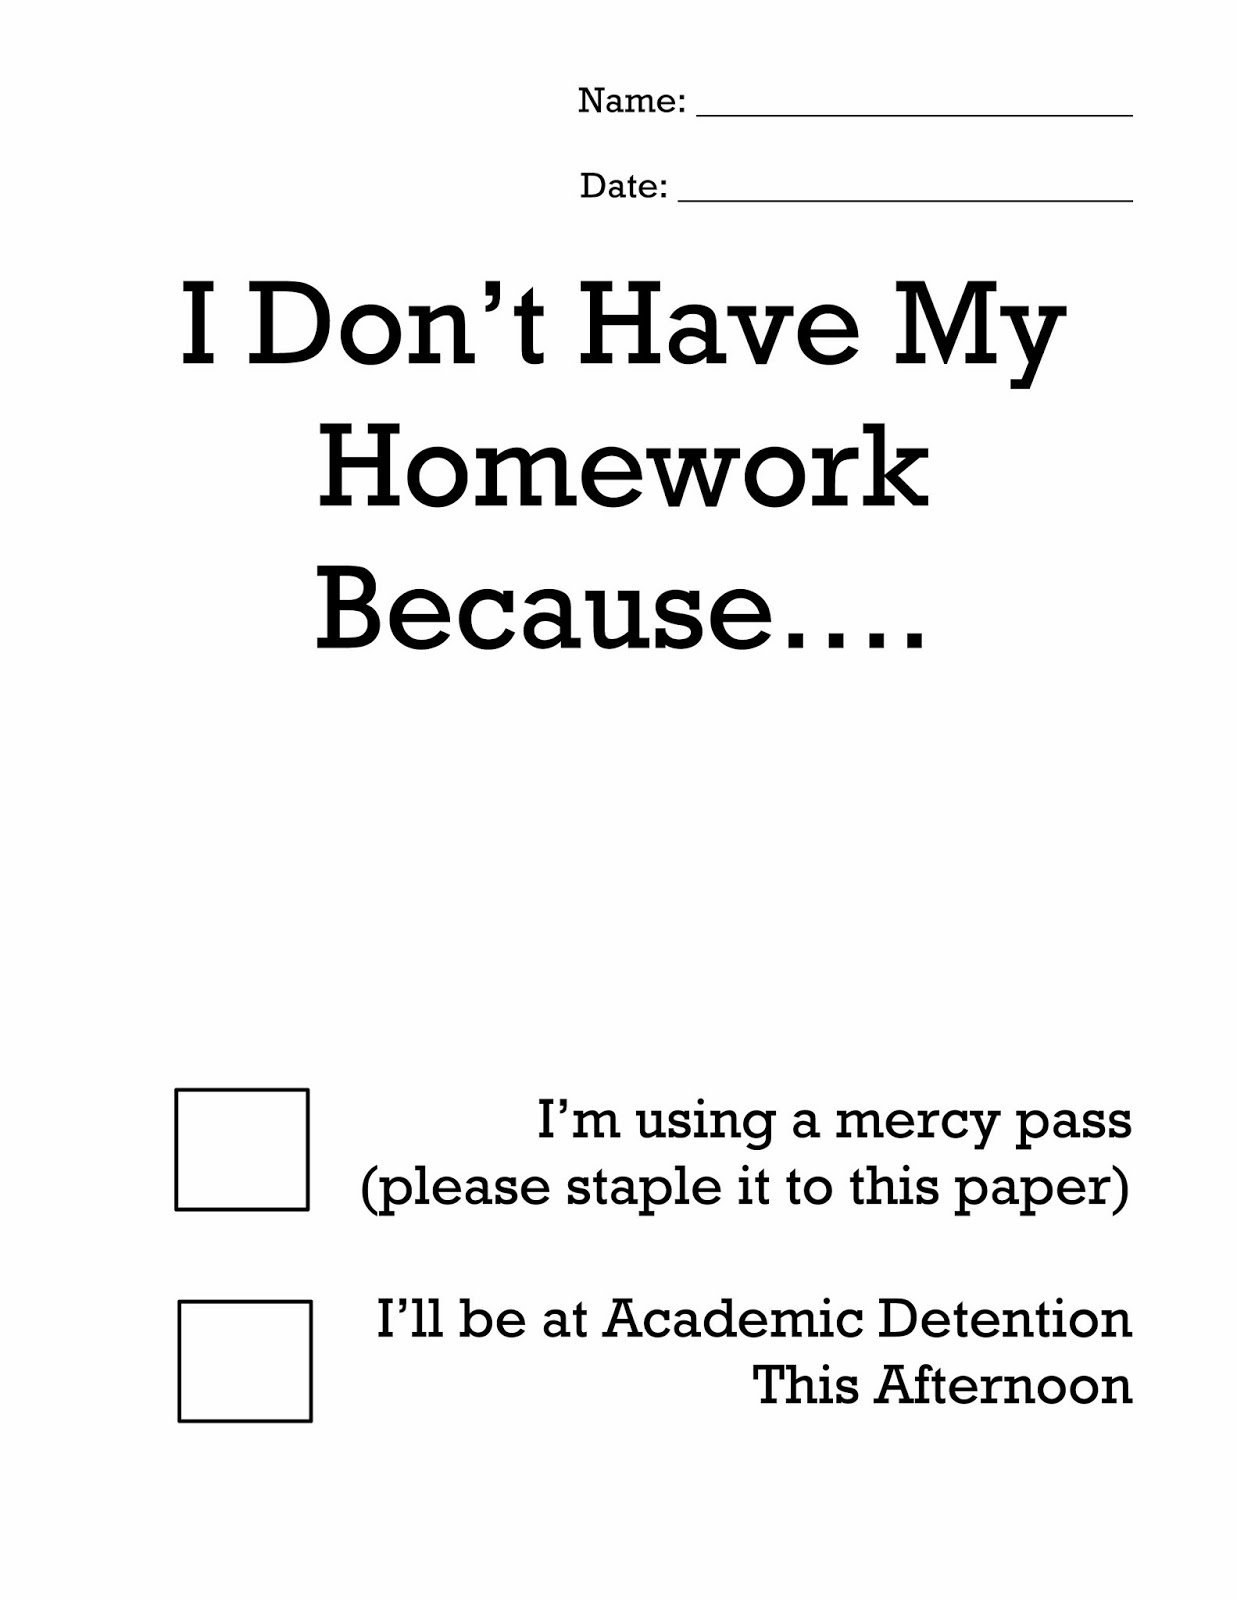 Late homework pass template